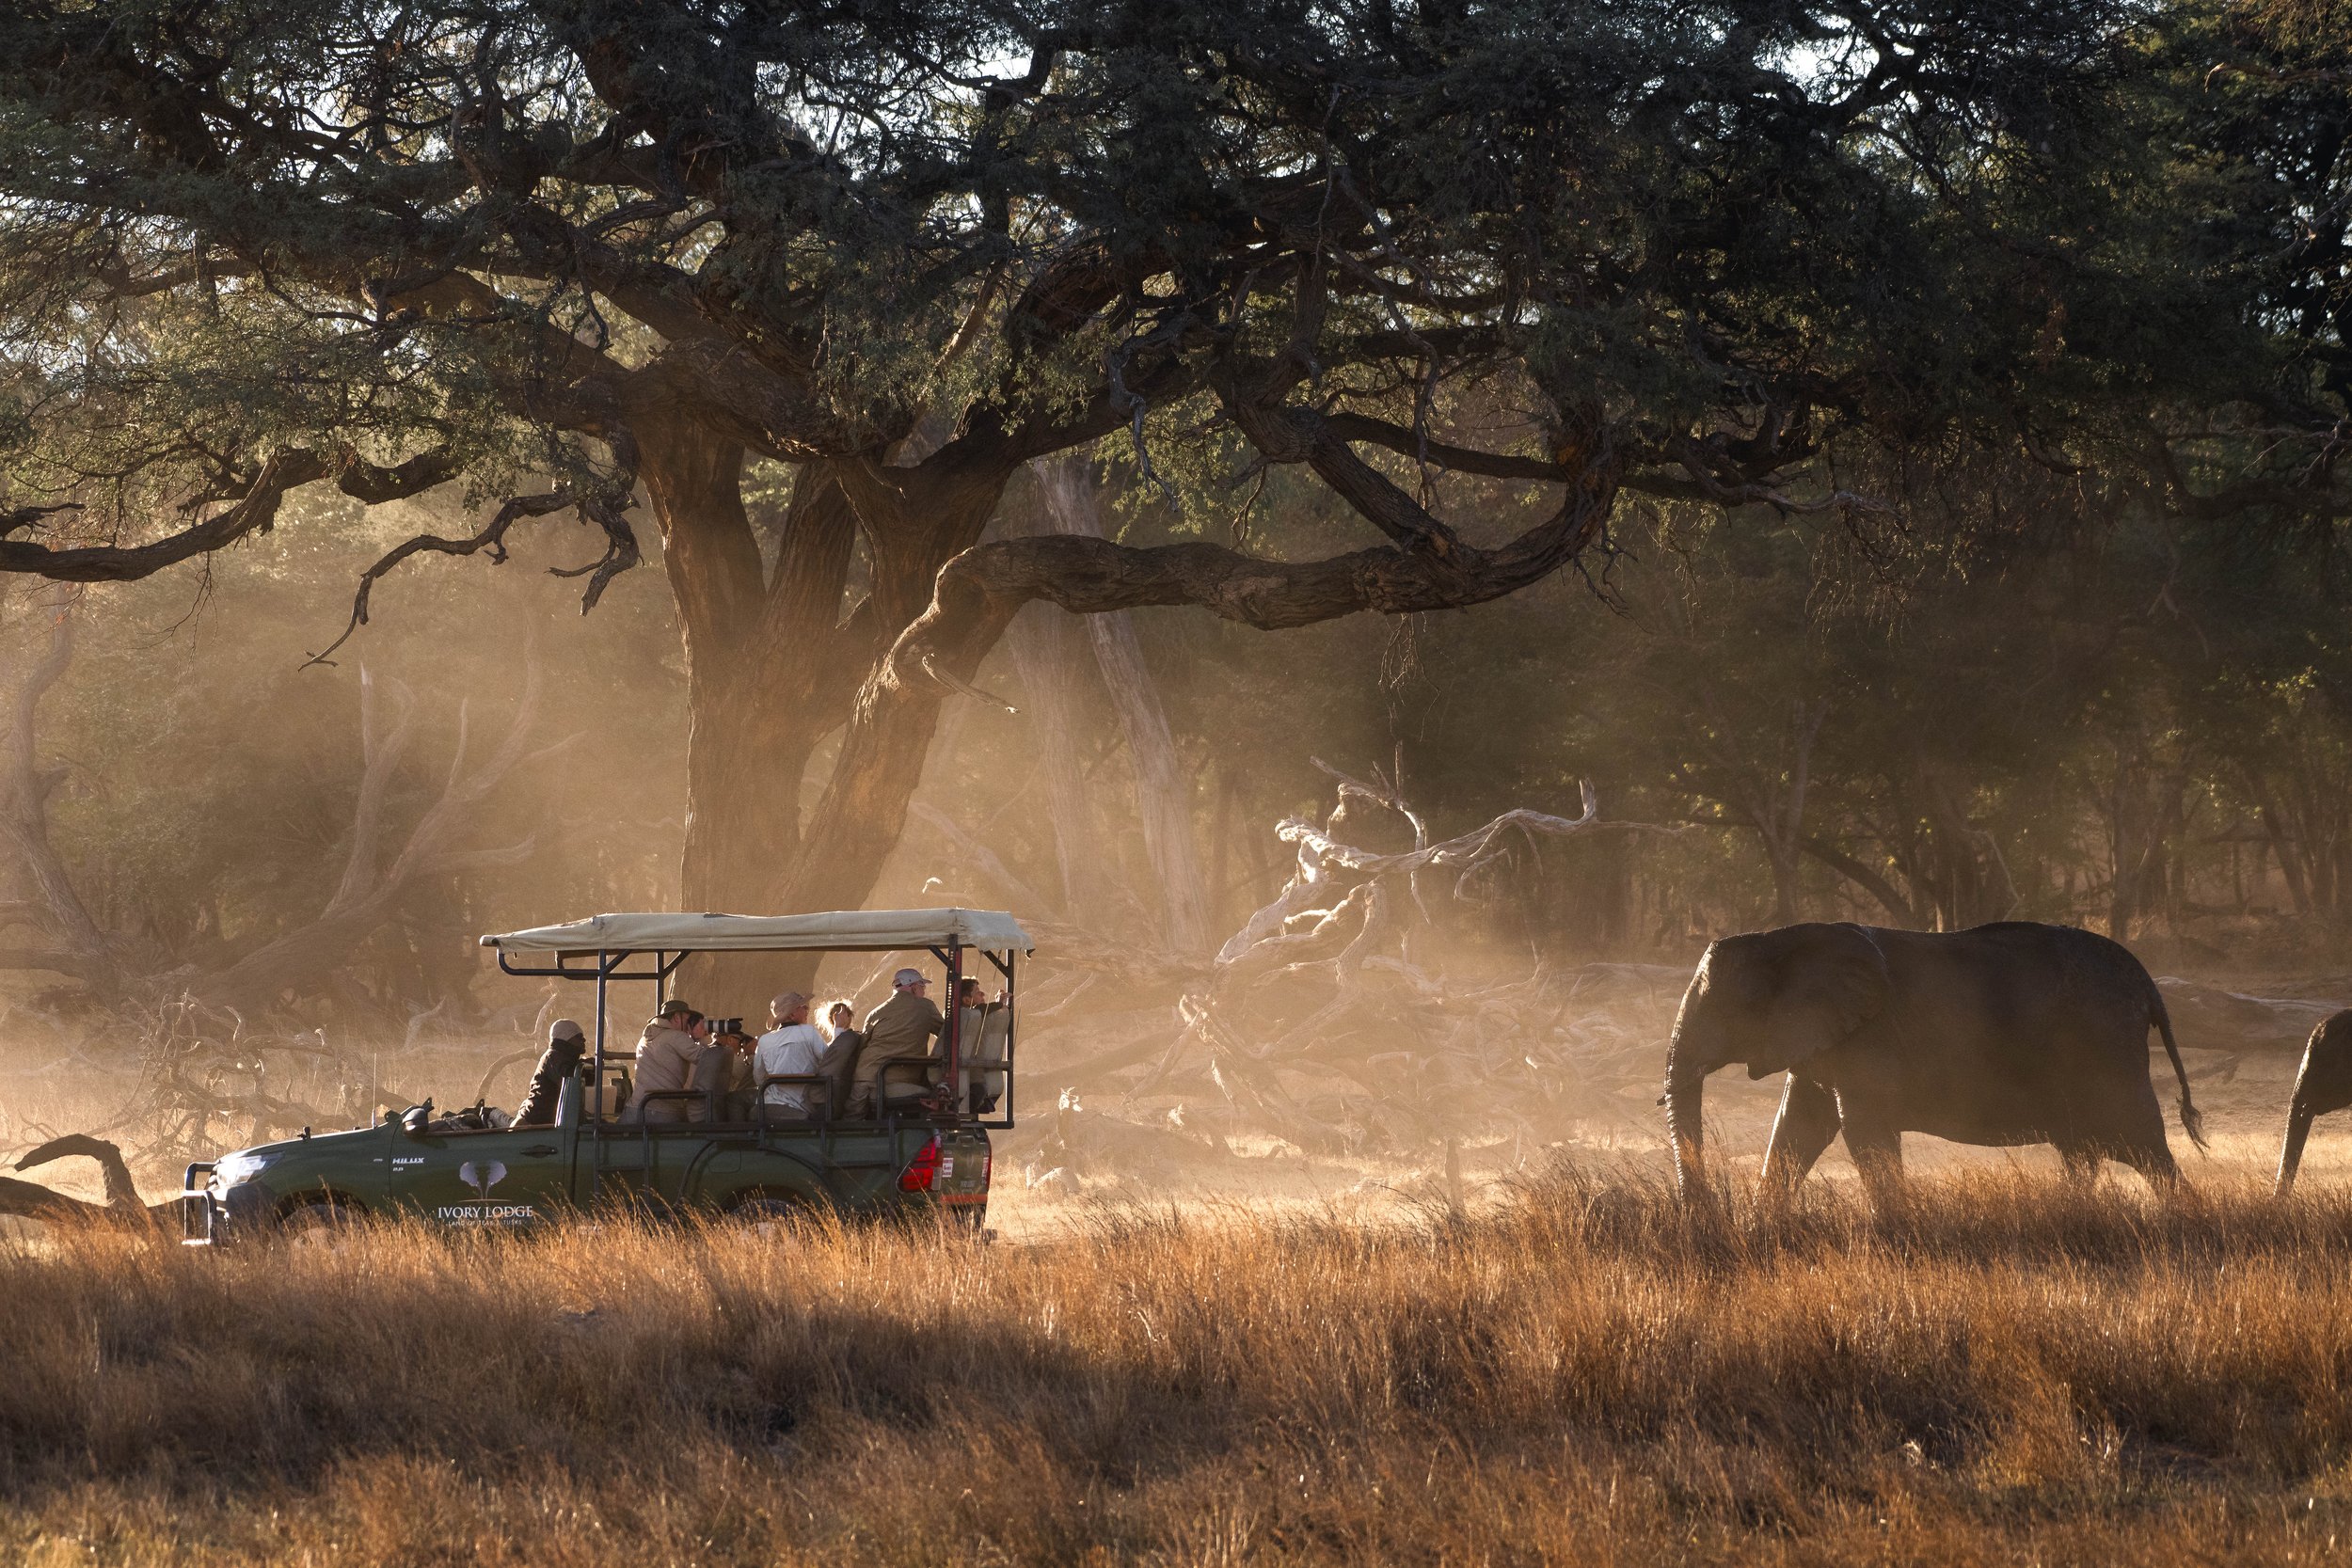 A group of elephants following the safari car.